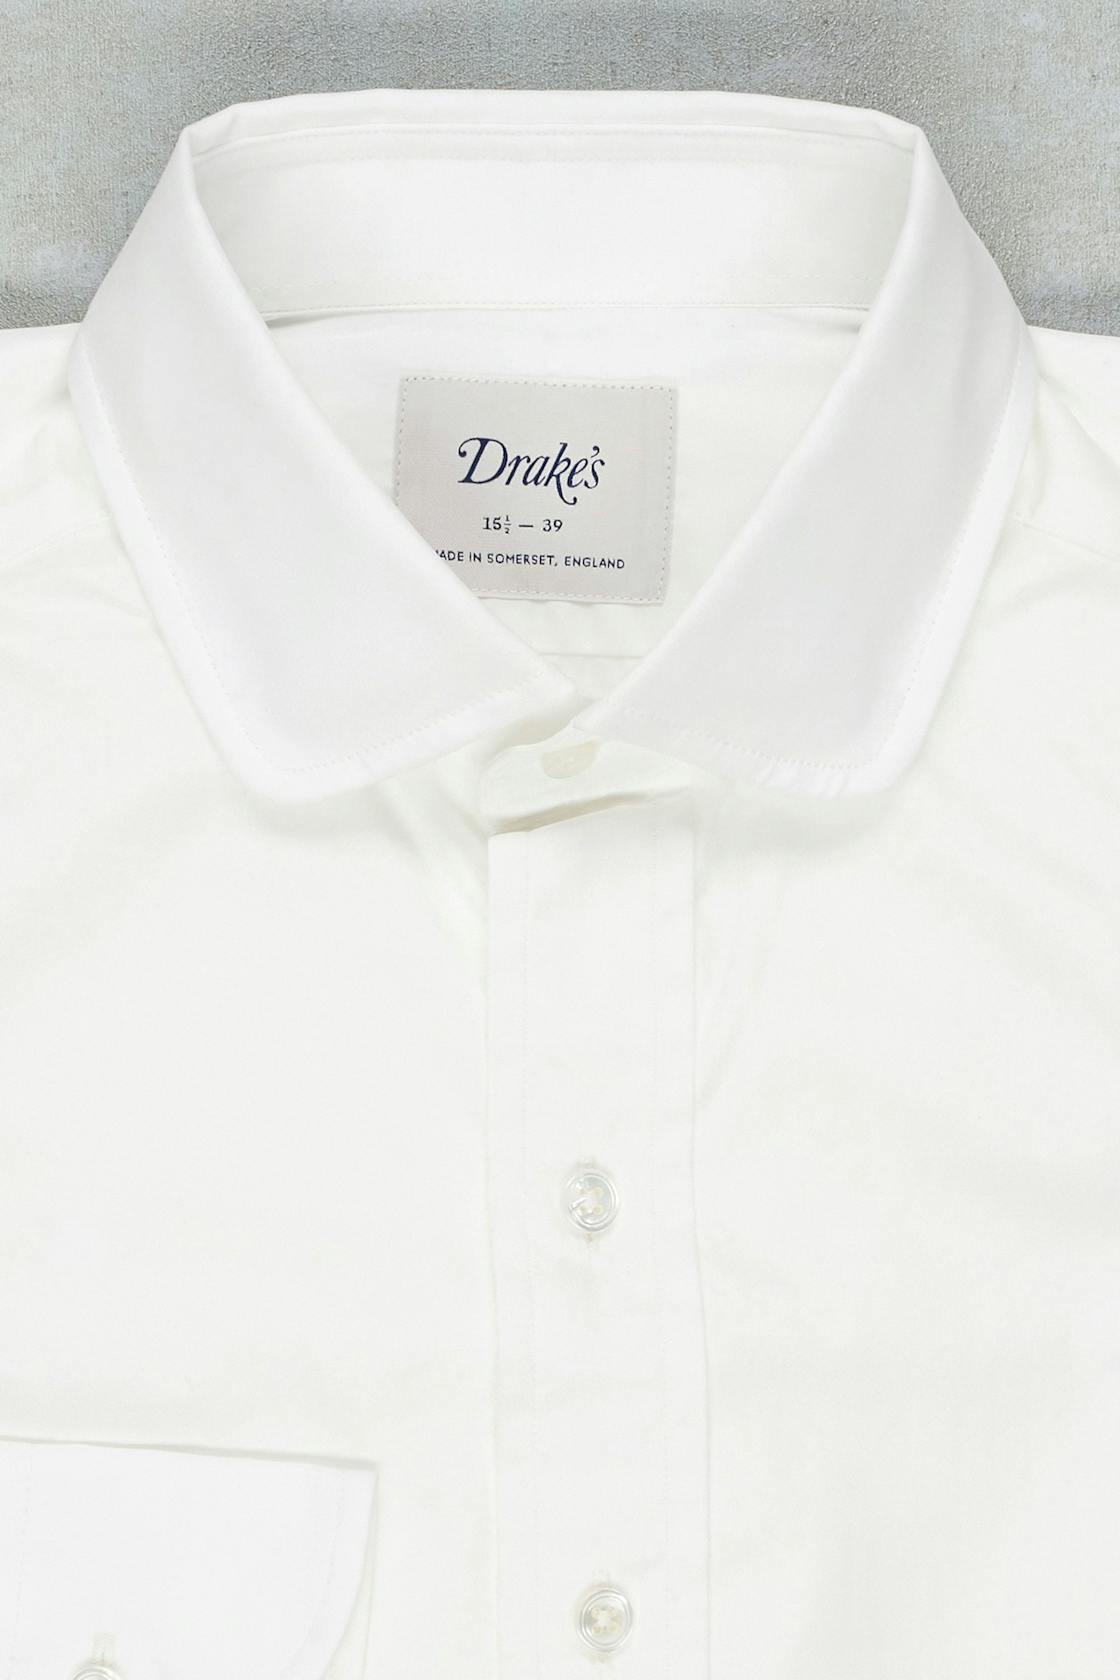 Drake's White Cotton Shirt